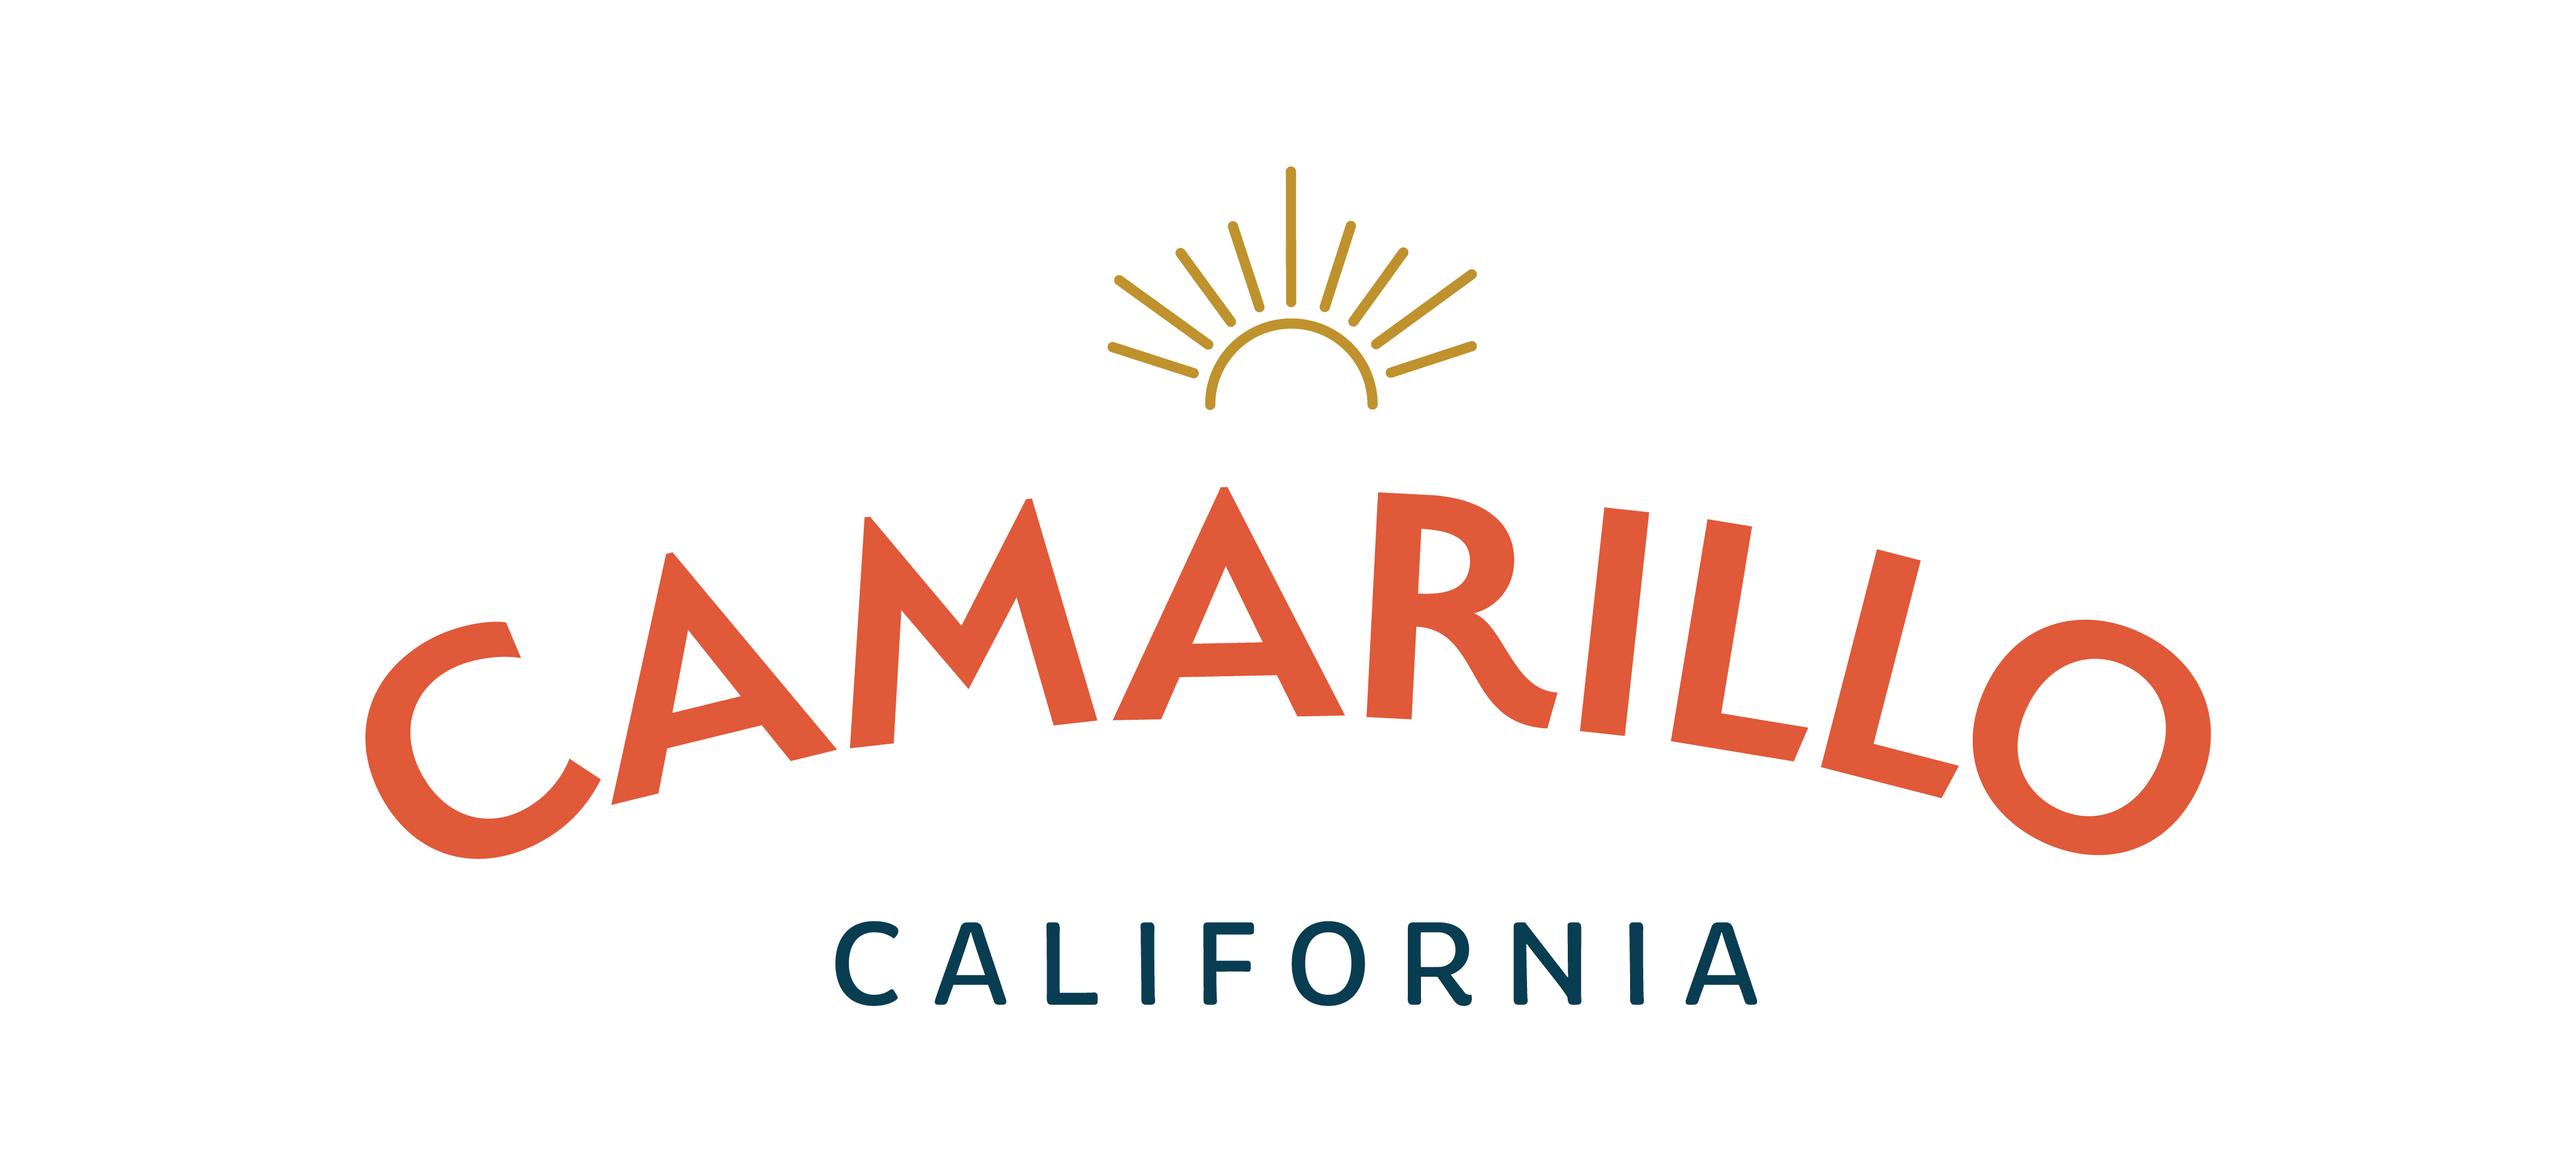 Camarillo Hotel & Tourism Association